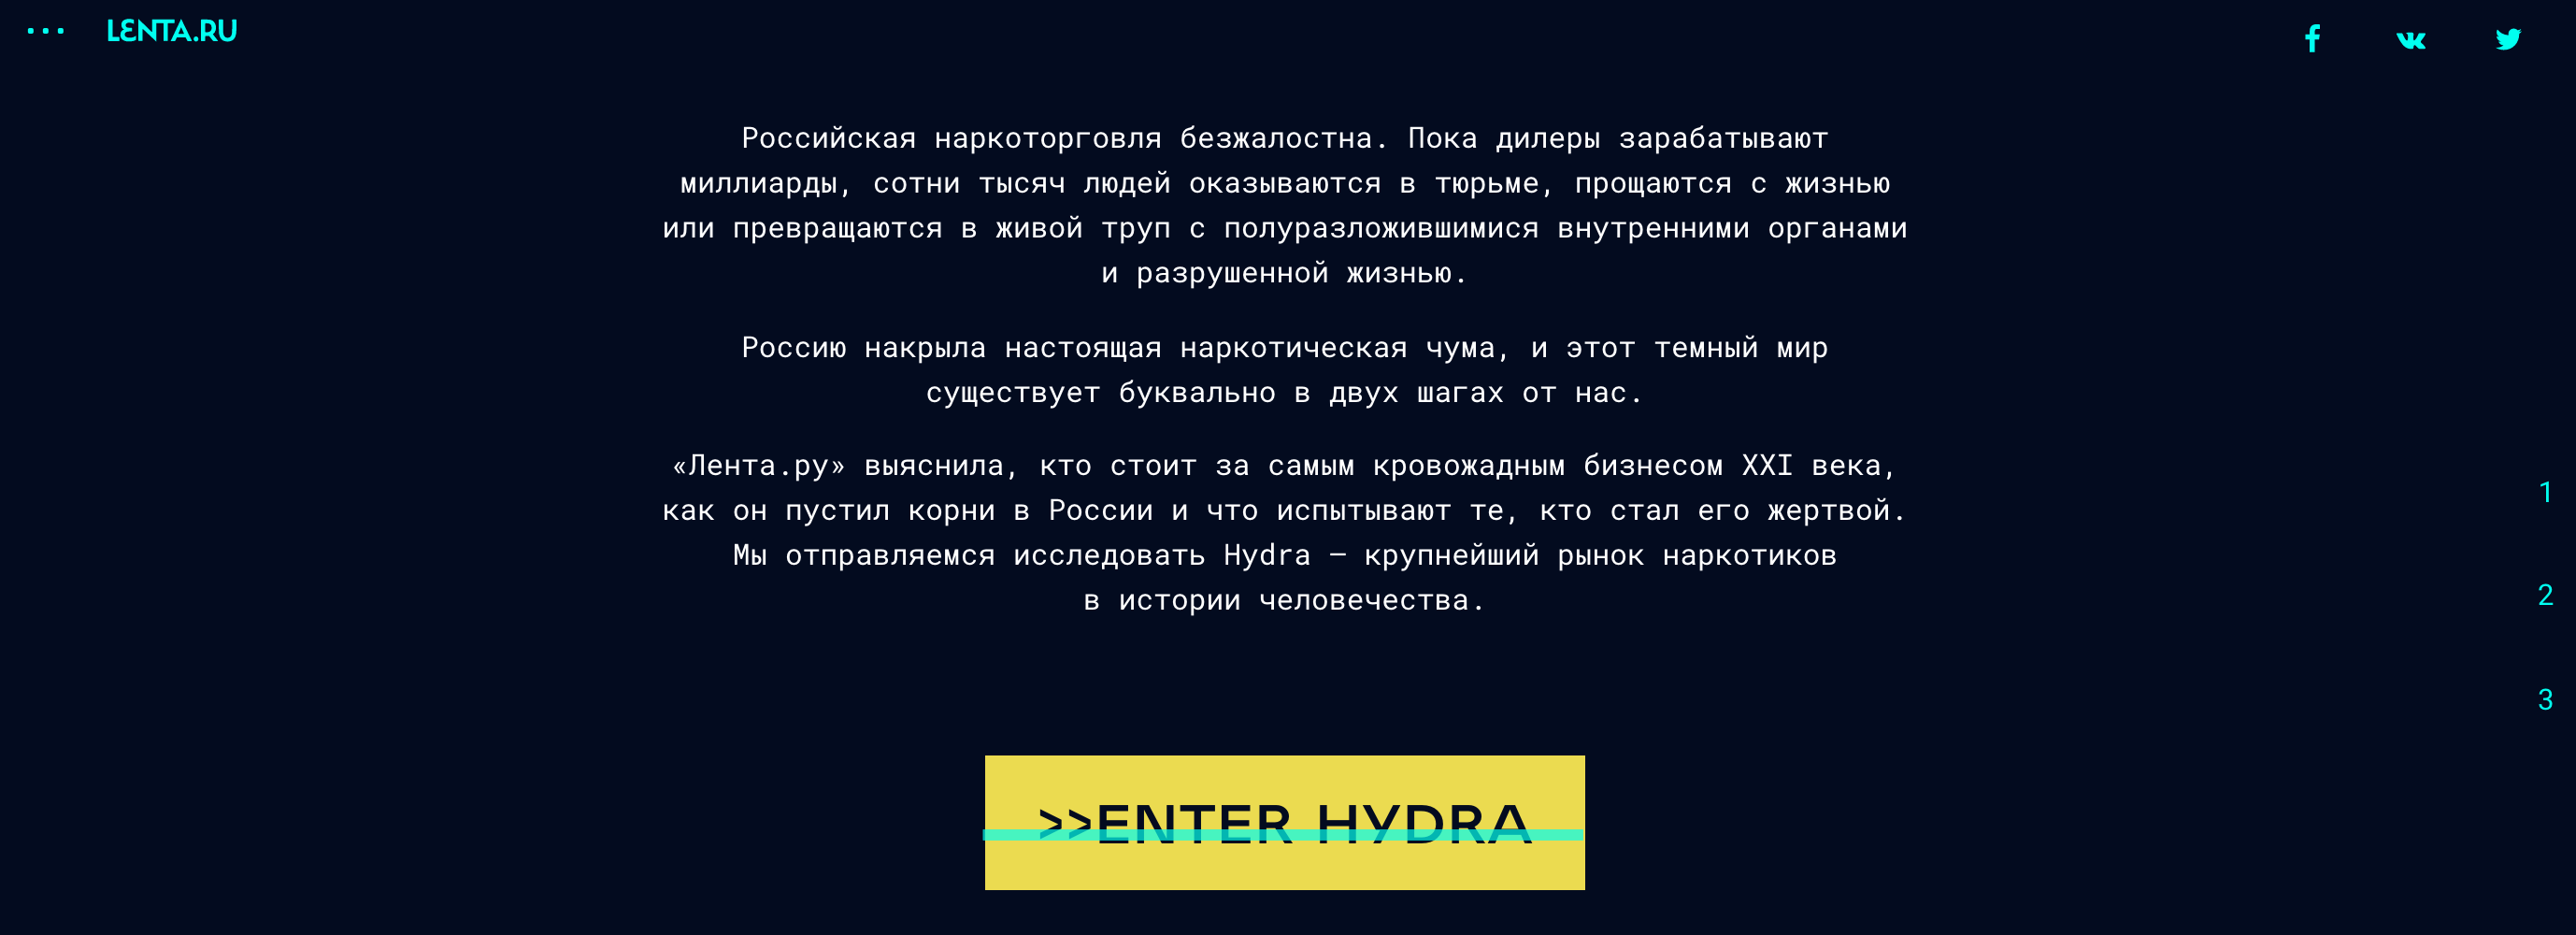 Лента darknet hydra tor browser вконтакте видео вход на гидру